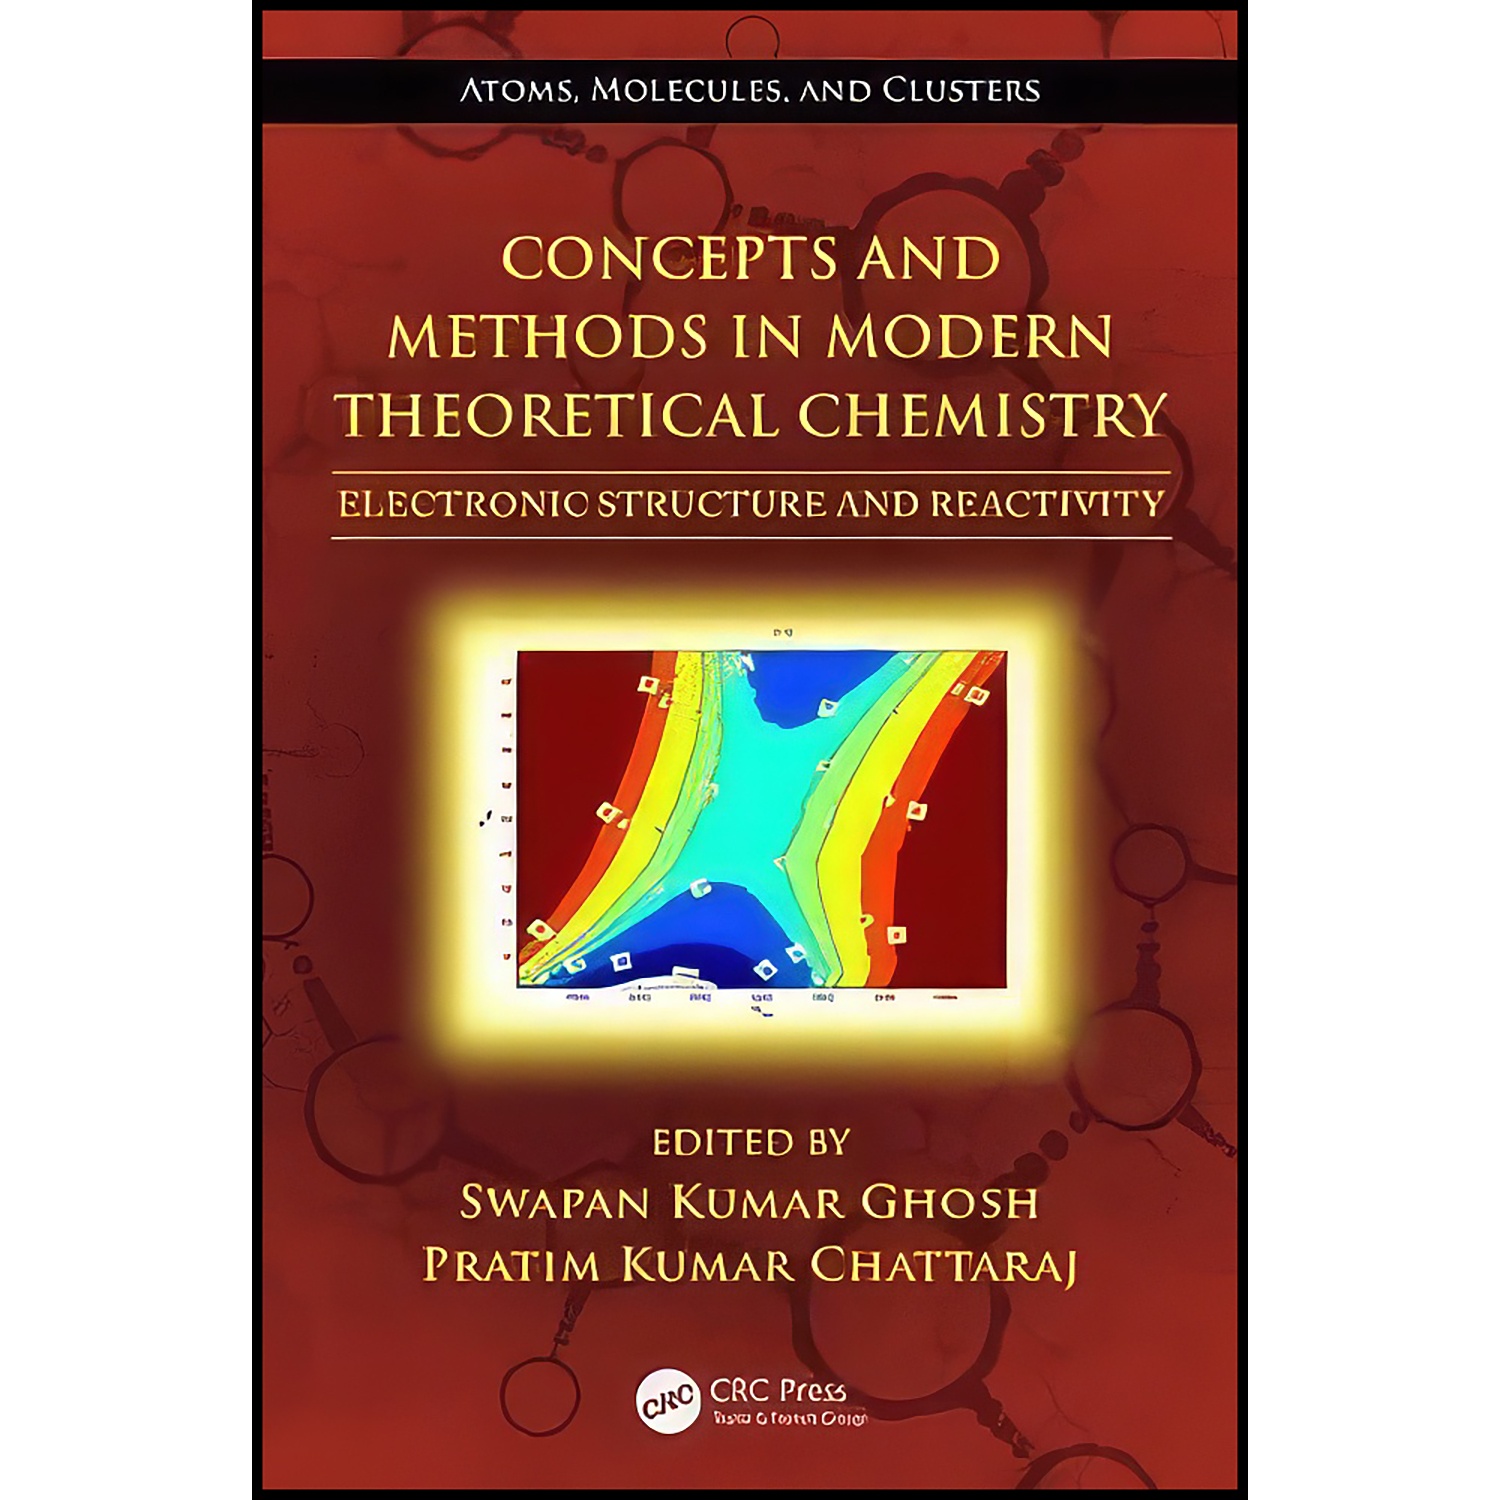 کتاب Concepts and Methods in Modern Theoretical Chemistry اثر جمعي از نويسندگان انتشارات CRC Press